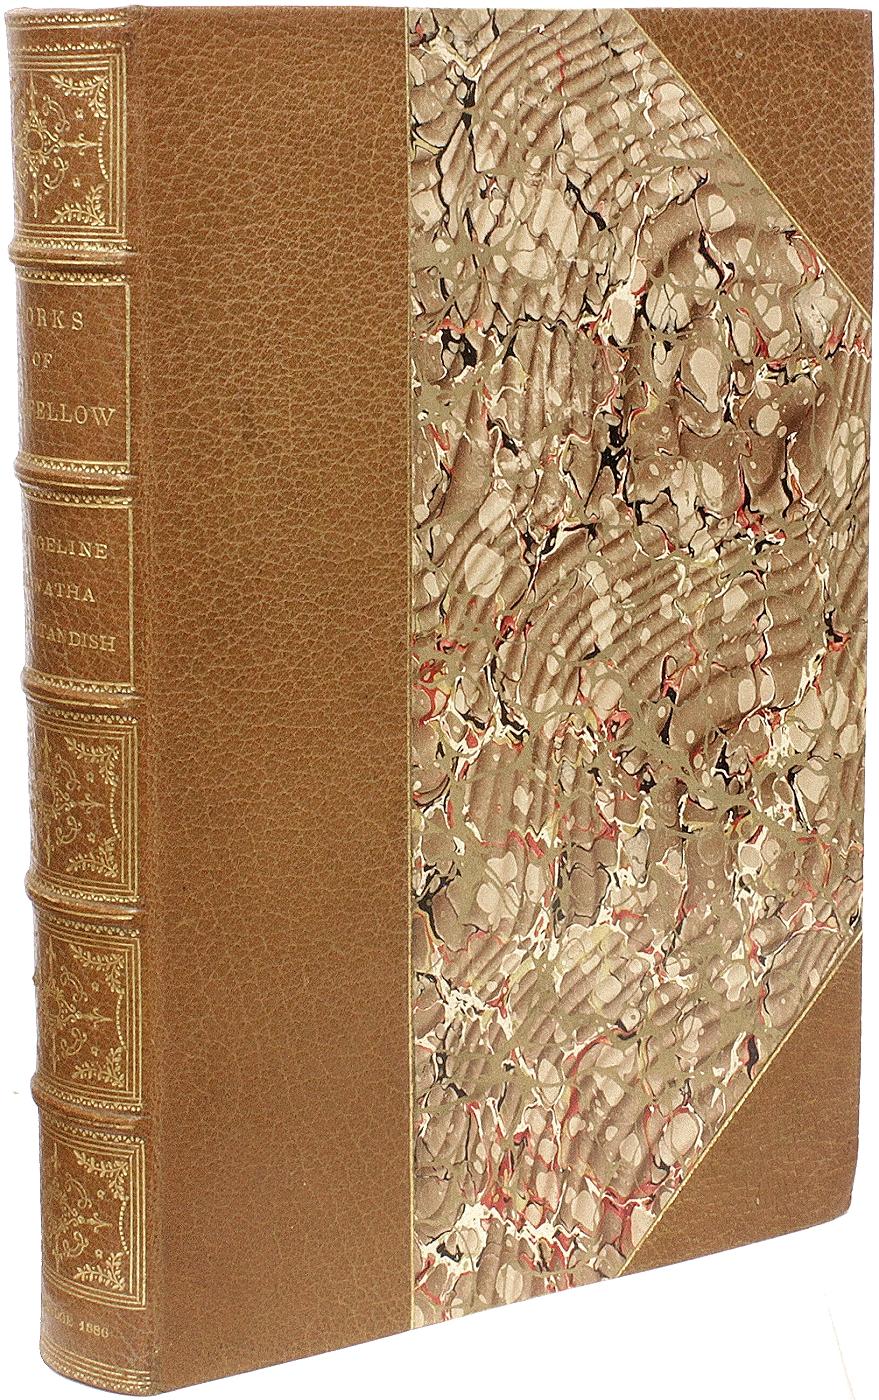 AUTHOR: LONGFELLOW, Henry Wadsworth. 

TITLE: The Complete Works Of Henry Wadsworth Longfellow.

PUBLISHER: Cambridge: The Riverside Press, 1886.

DESCRIPTION: LARGE PAPER EDITION. 11 vols., 8-7/8